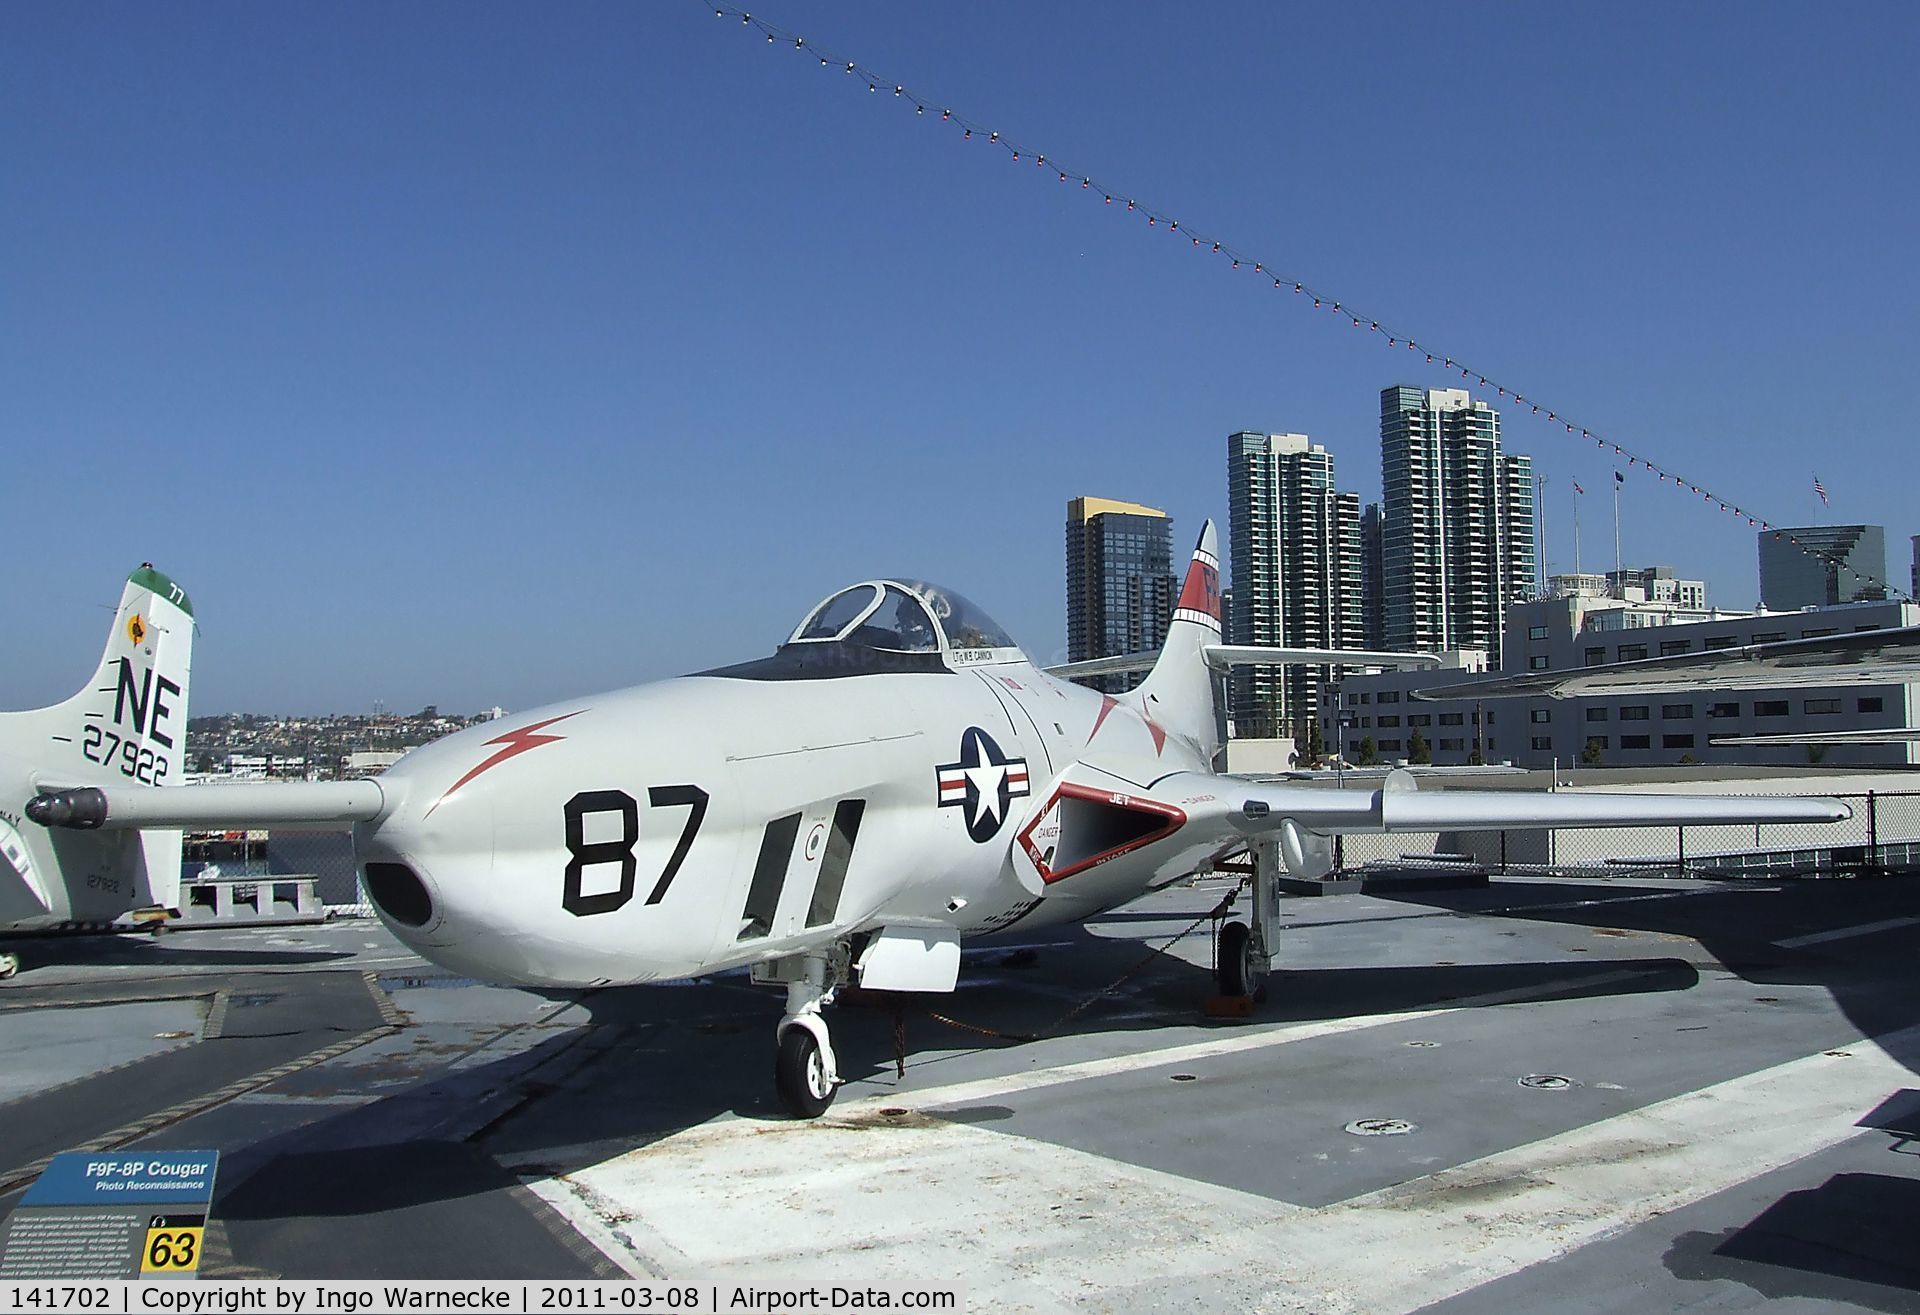 141702, Grumman F9F-8P Cougar C/N Not found 141702, Grumman F9F-8P Cougar on the flight deck of the USS Midway Museum, San Diego CA